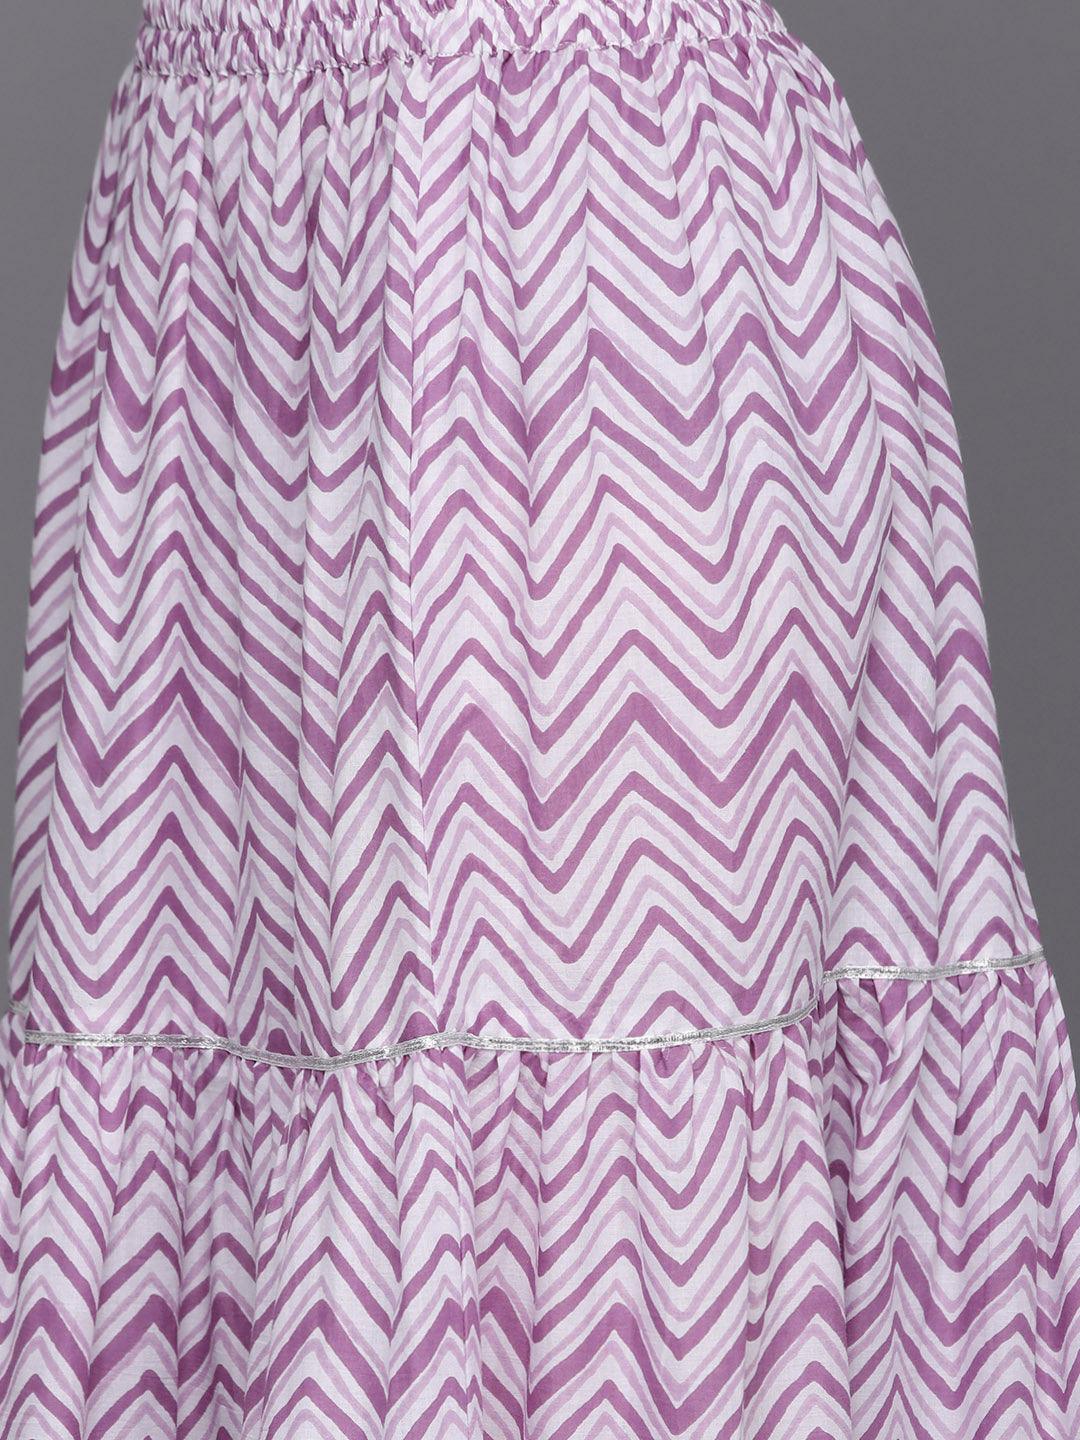 Purple Printed Cotton Straight Kurta With Skirt & Dupatta